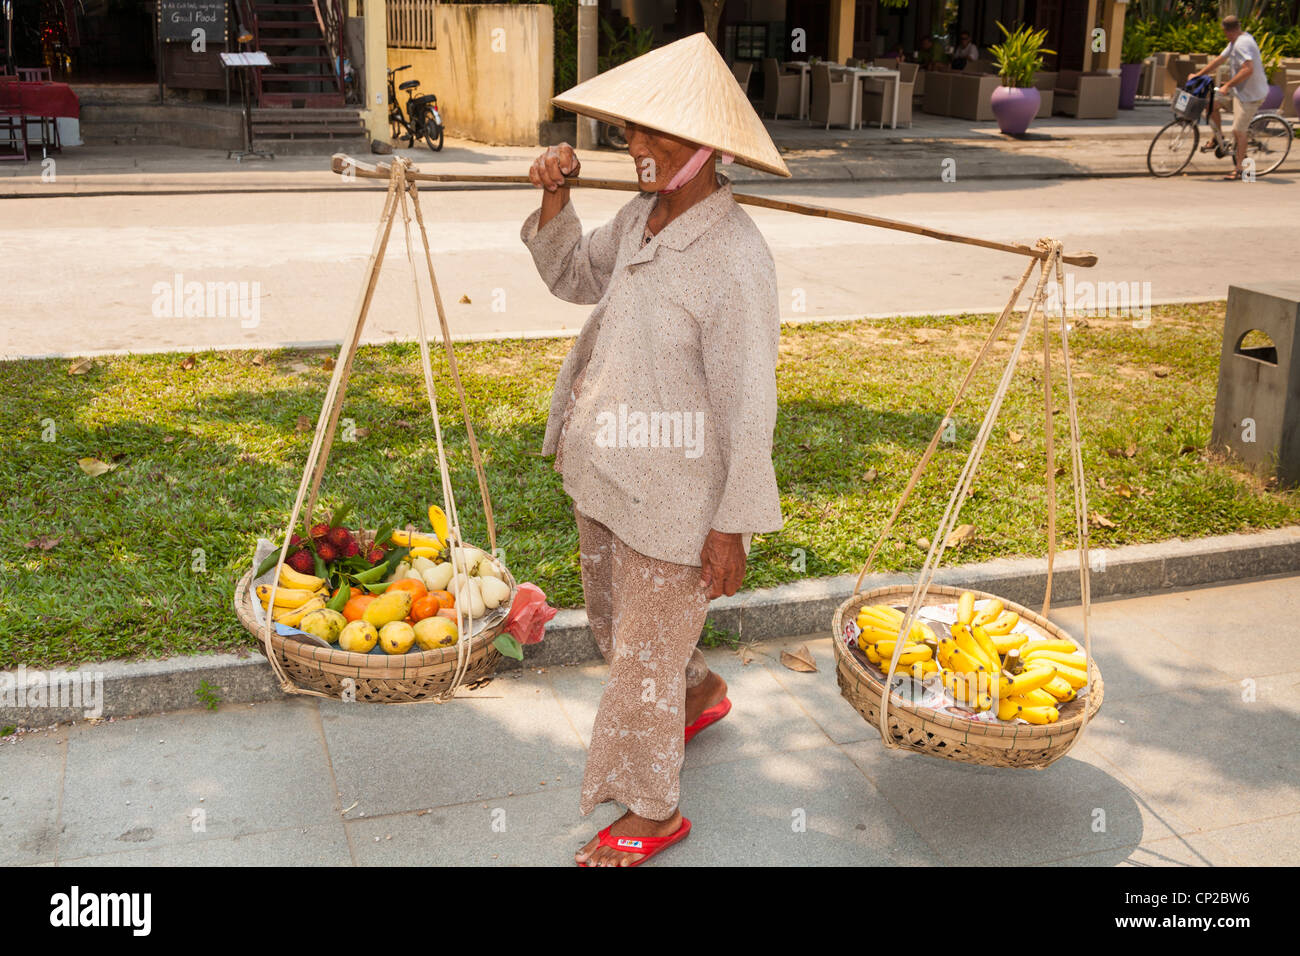 A Vietnamese woman, carrying baskets of fruit, Hoi An, Quang Nam province, Vietnam Stock Photo